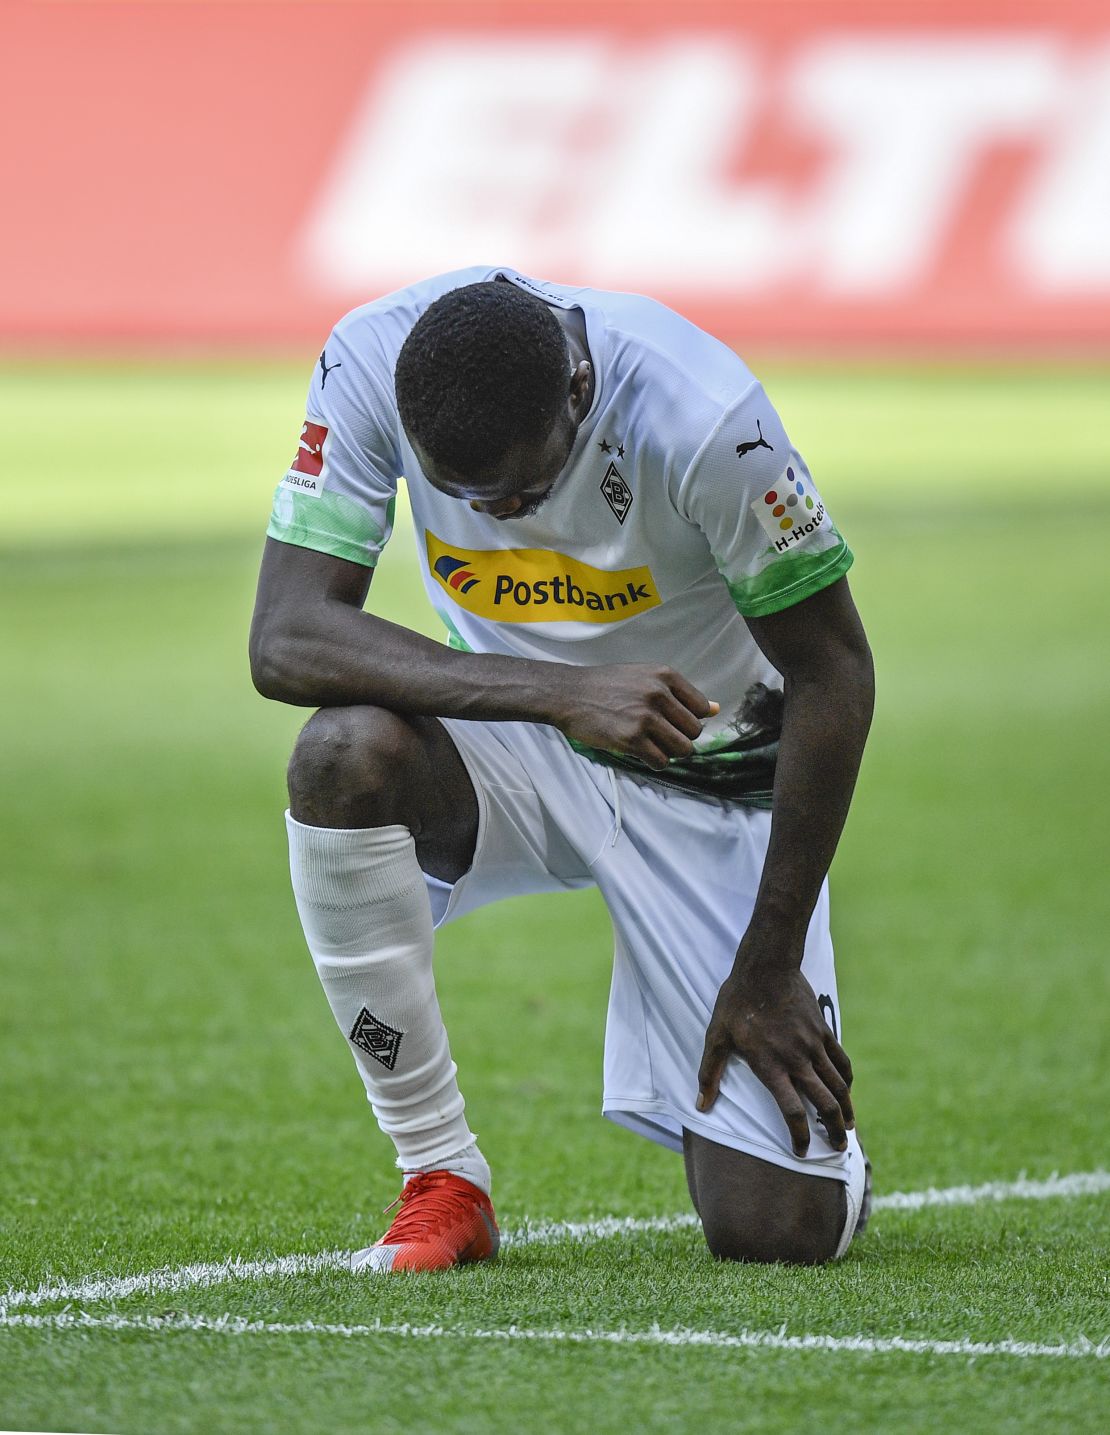 Borussia Mönchengladbach's Marcus Thuram Moenchengladbach's Marcus Thuram takes a knee after scoring Union Berlin at Borussia-Park on May 31, 2020.